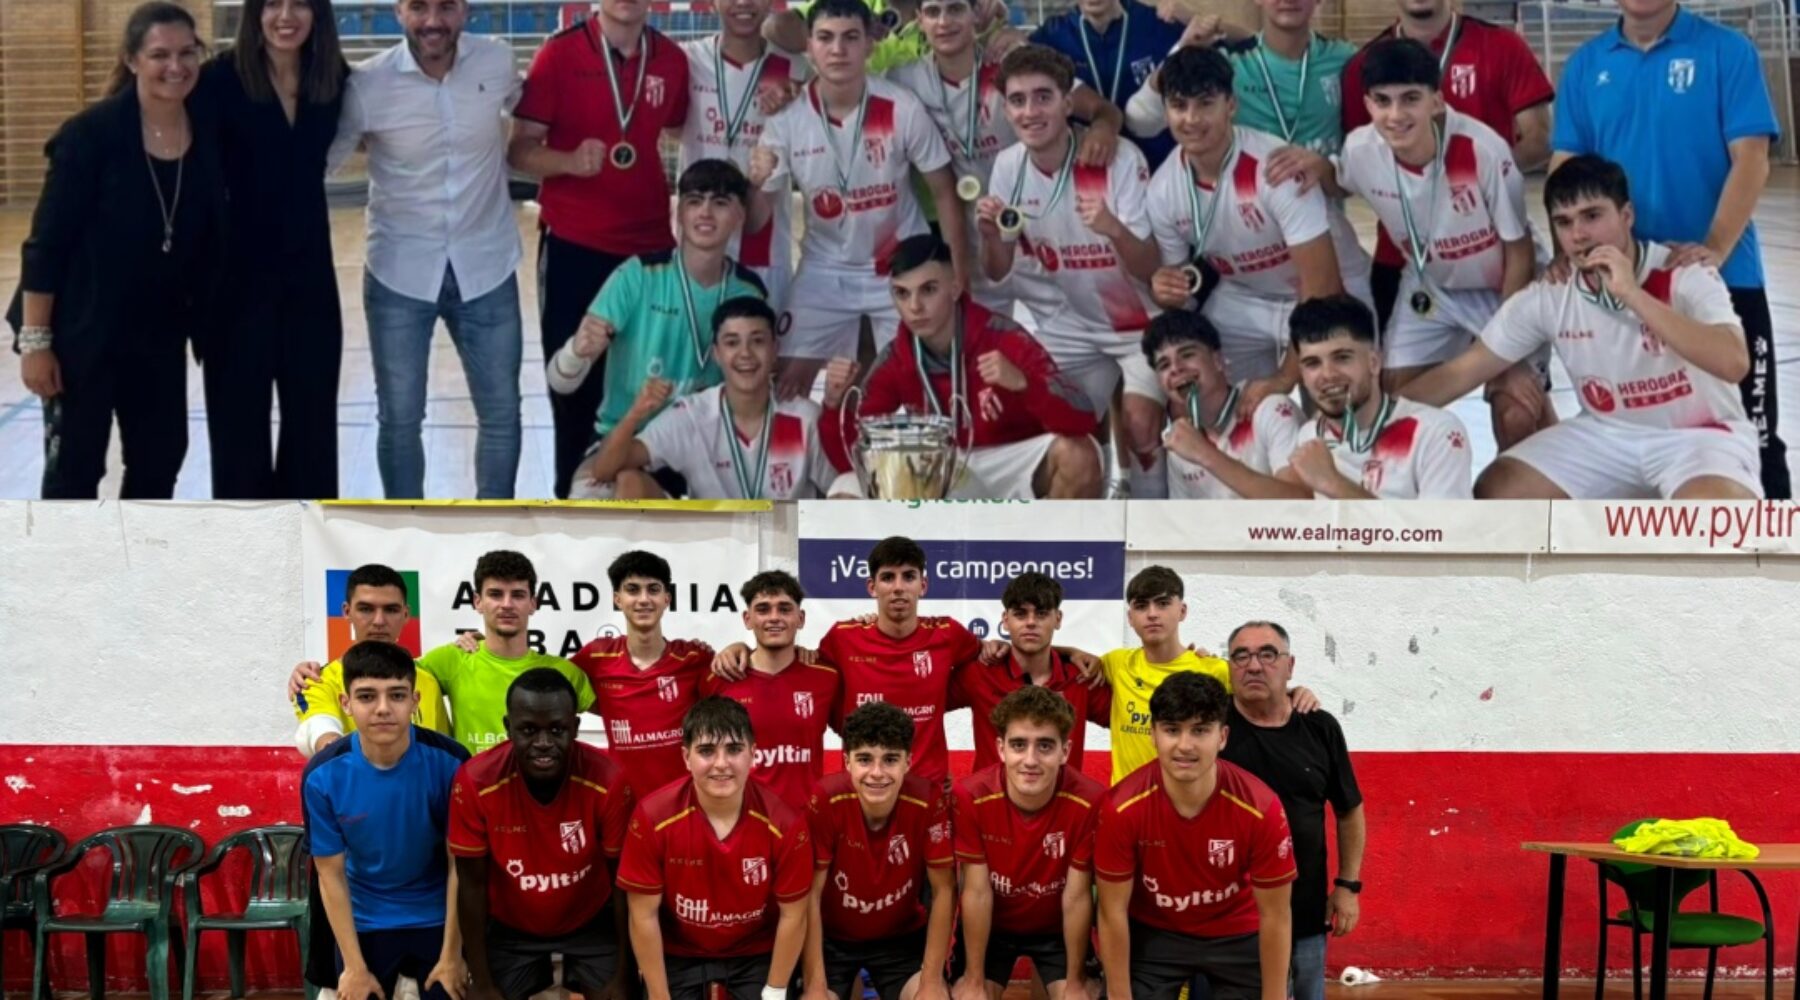 El juvenil PYLTIN Albolote FS se lleva la ‘Copa Andalucía’ y el juvenil ‘B’ PYLTIN Albolote FS consuma su ascenso a Primera Andaluza